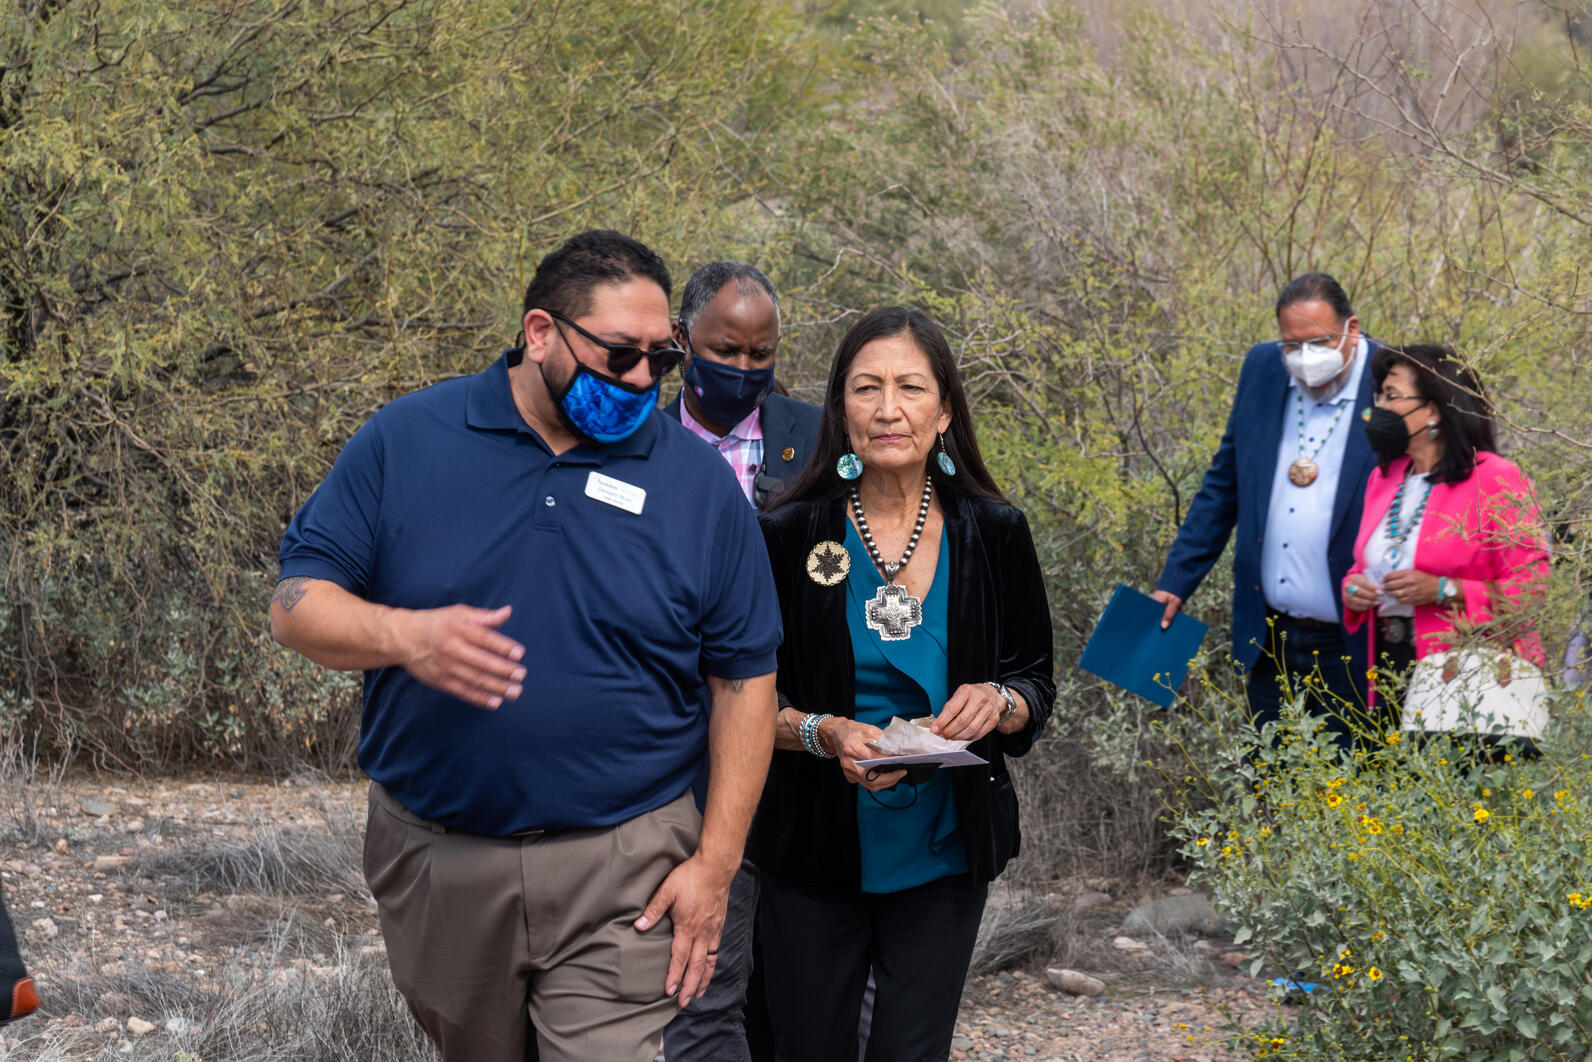 Genaro Ruiz and Deb Haaland, Secretary of the Interior, walk the native plant gardens at the Rio Salado Audubon Center.